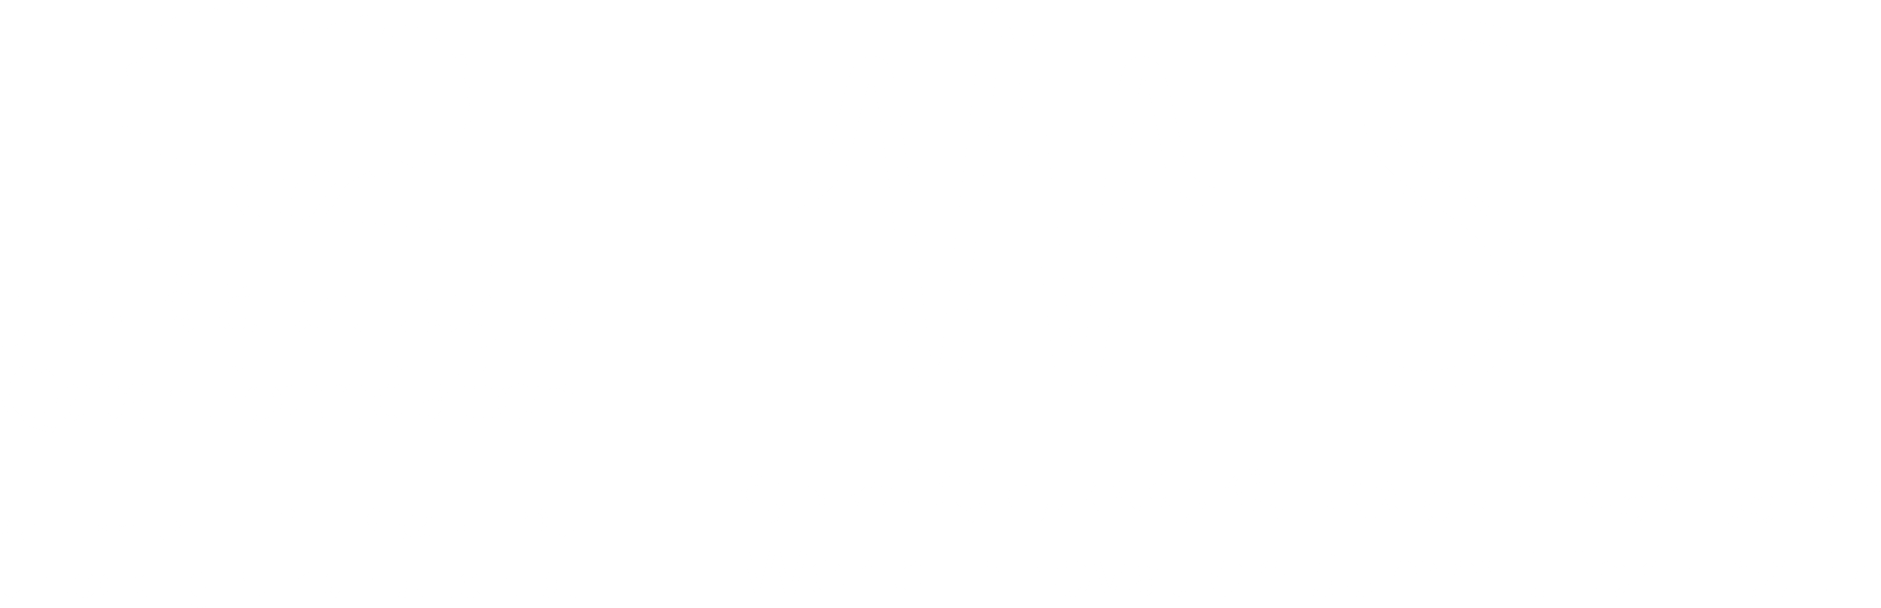 wish logo